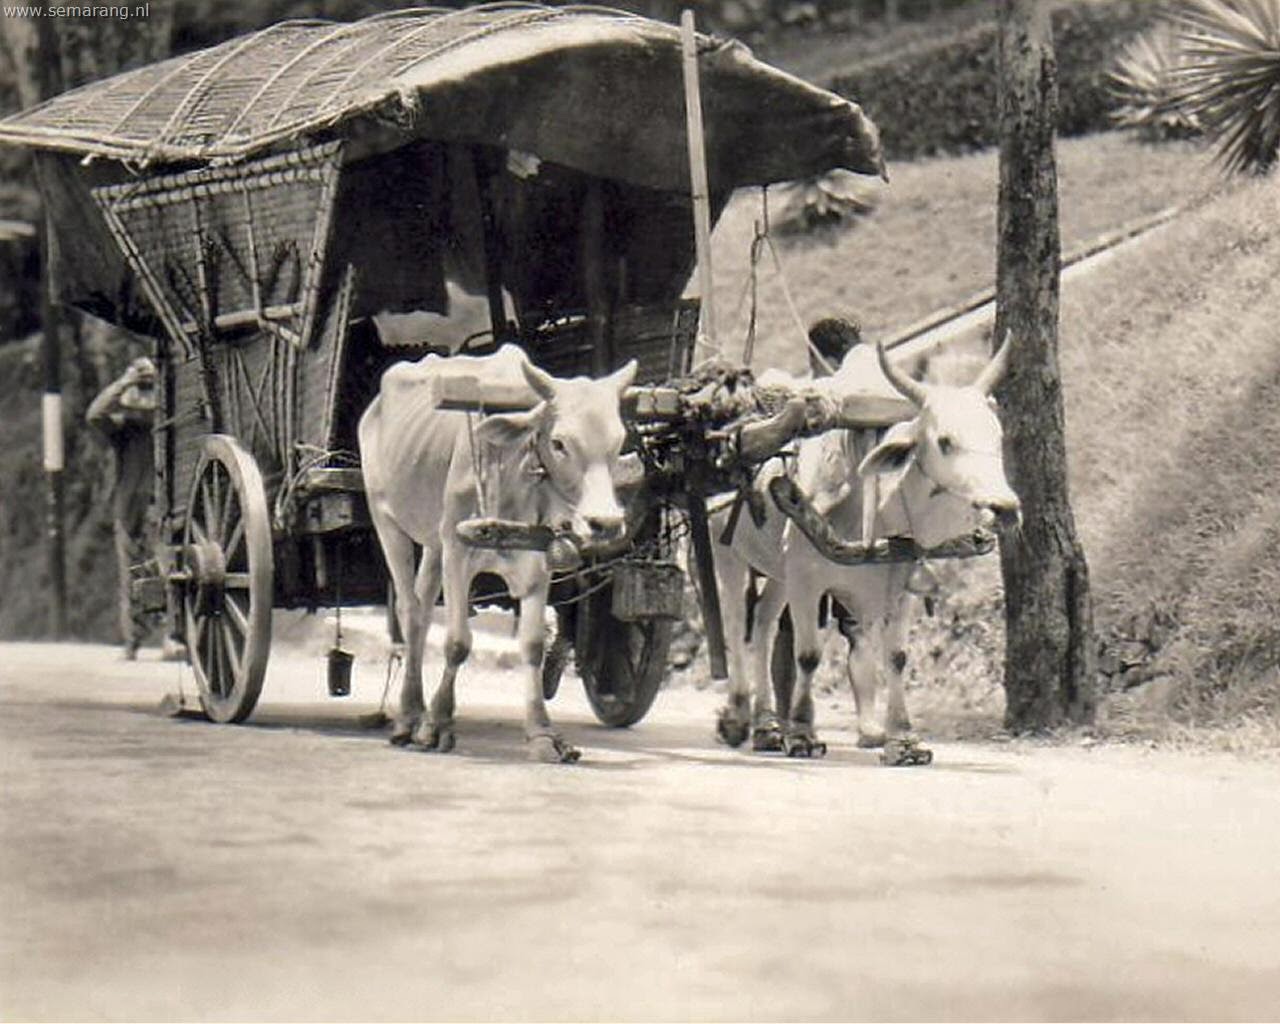 papier peint gambar orang,véhicule,cheval et buggy,chariot,wagon,animal de travail